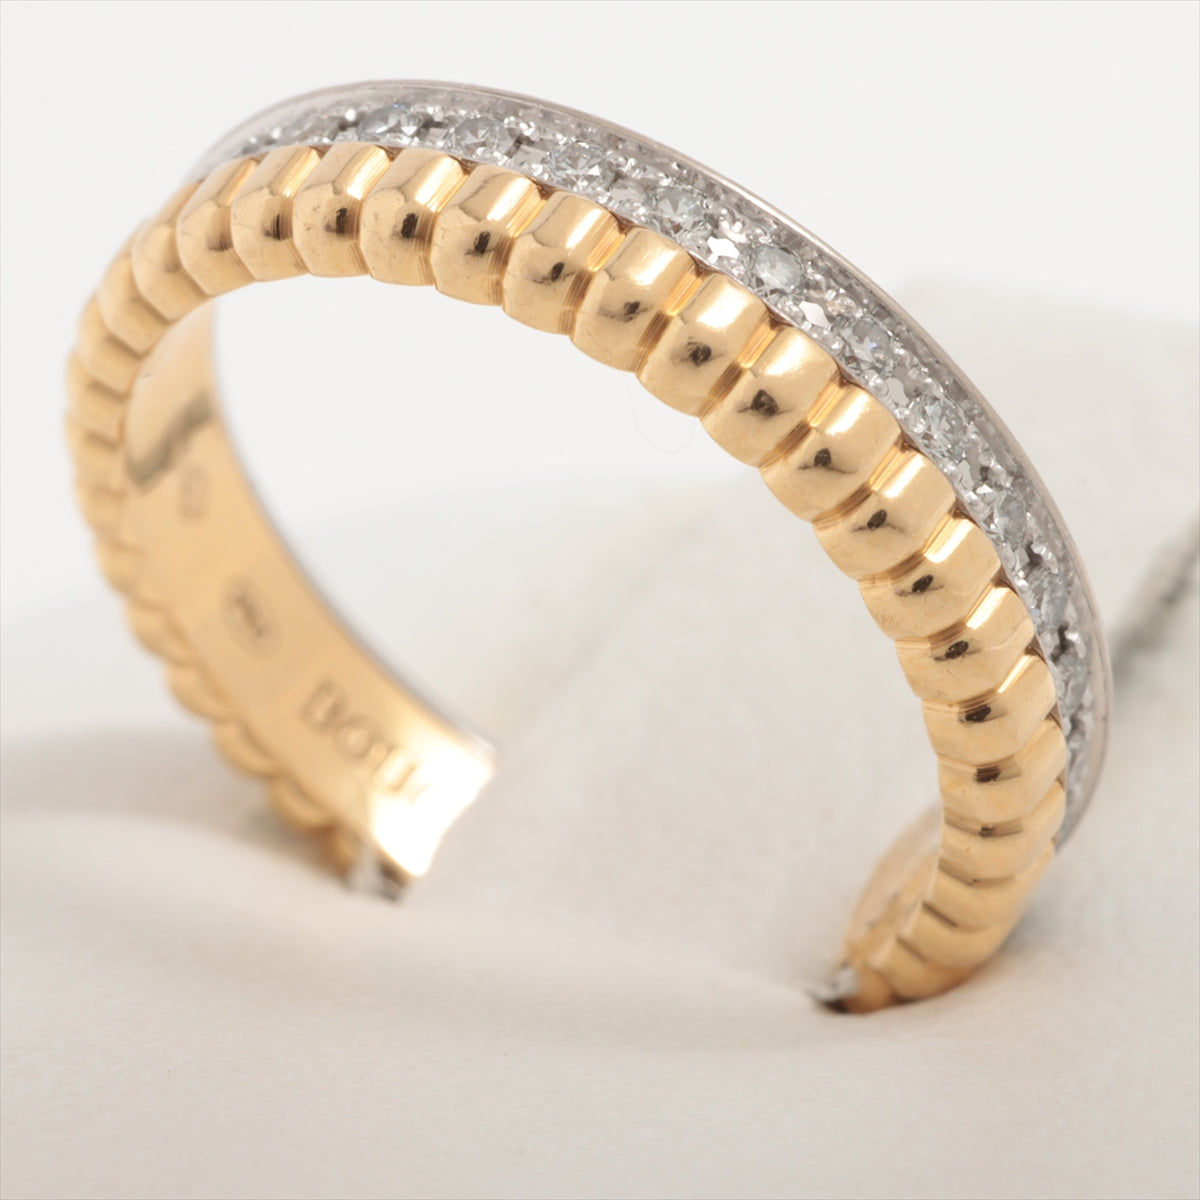 Boucheron Quatre Radiant Marriages Diamond Ring 750(YG×WG) 3.0g 46 JAL0013446